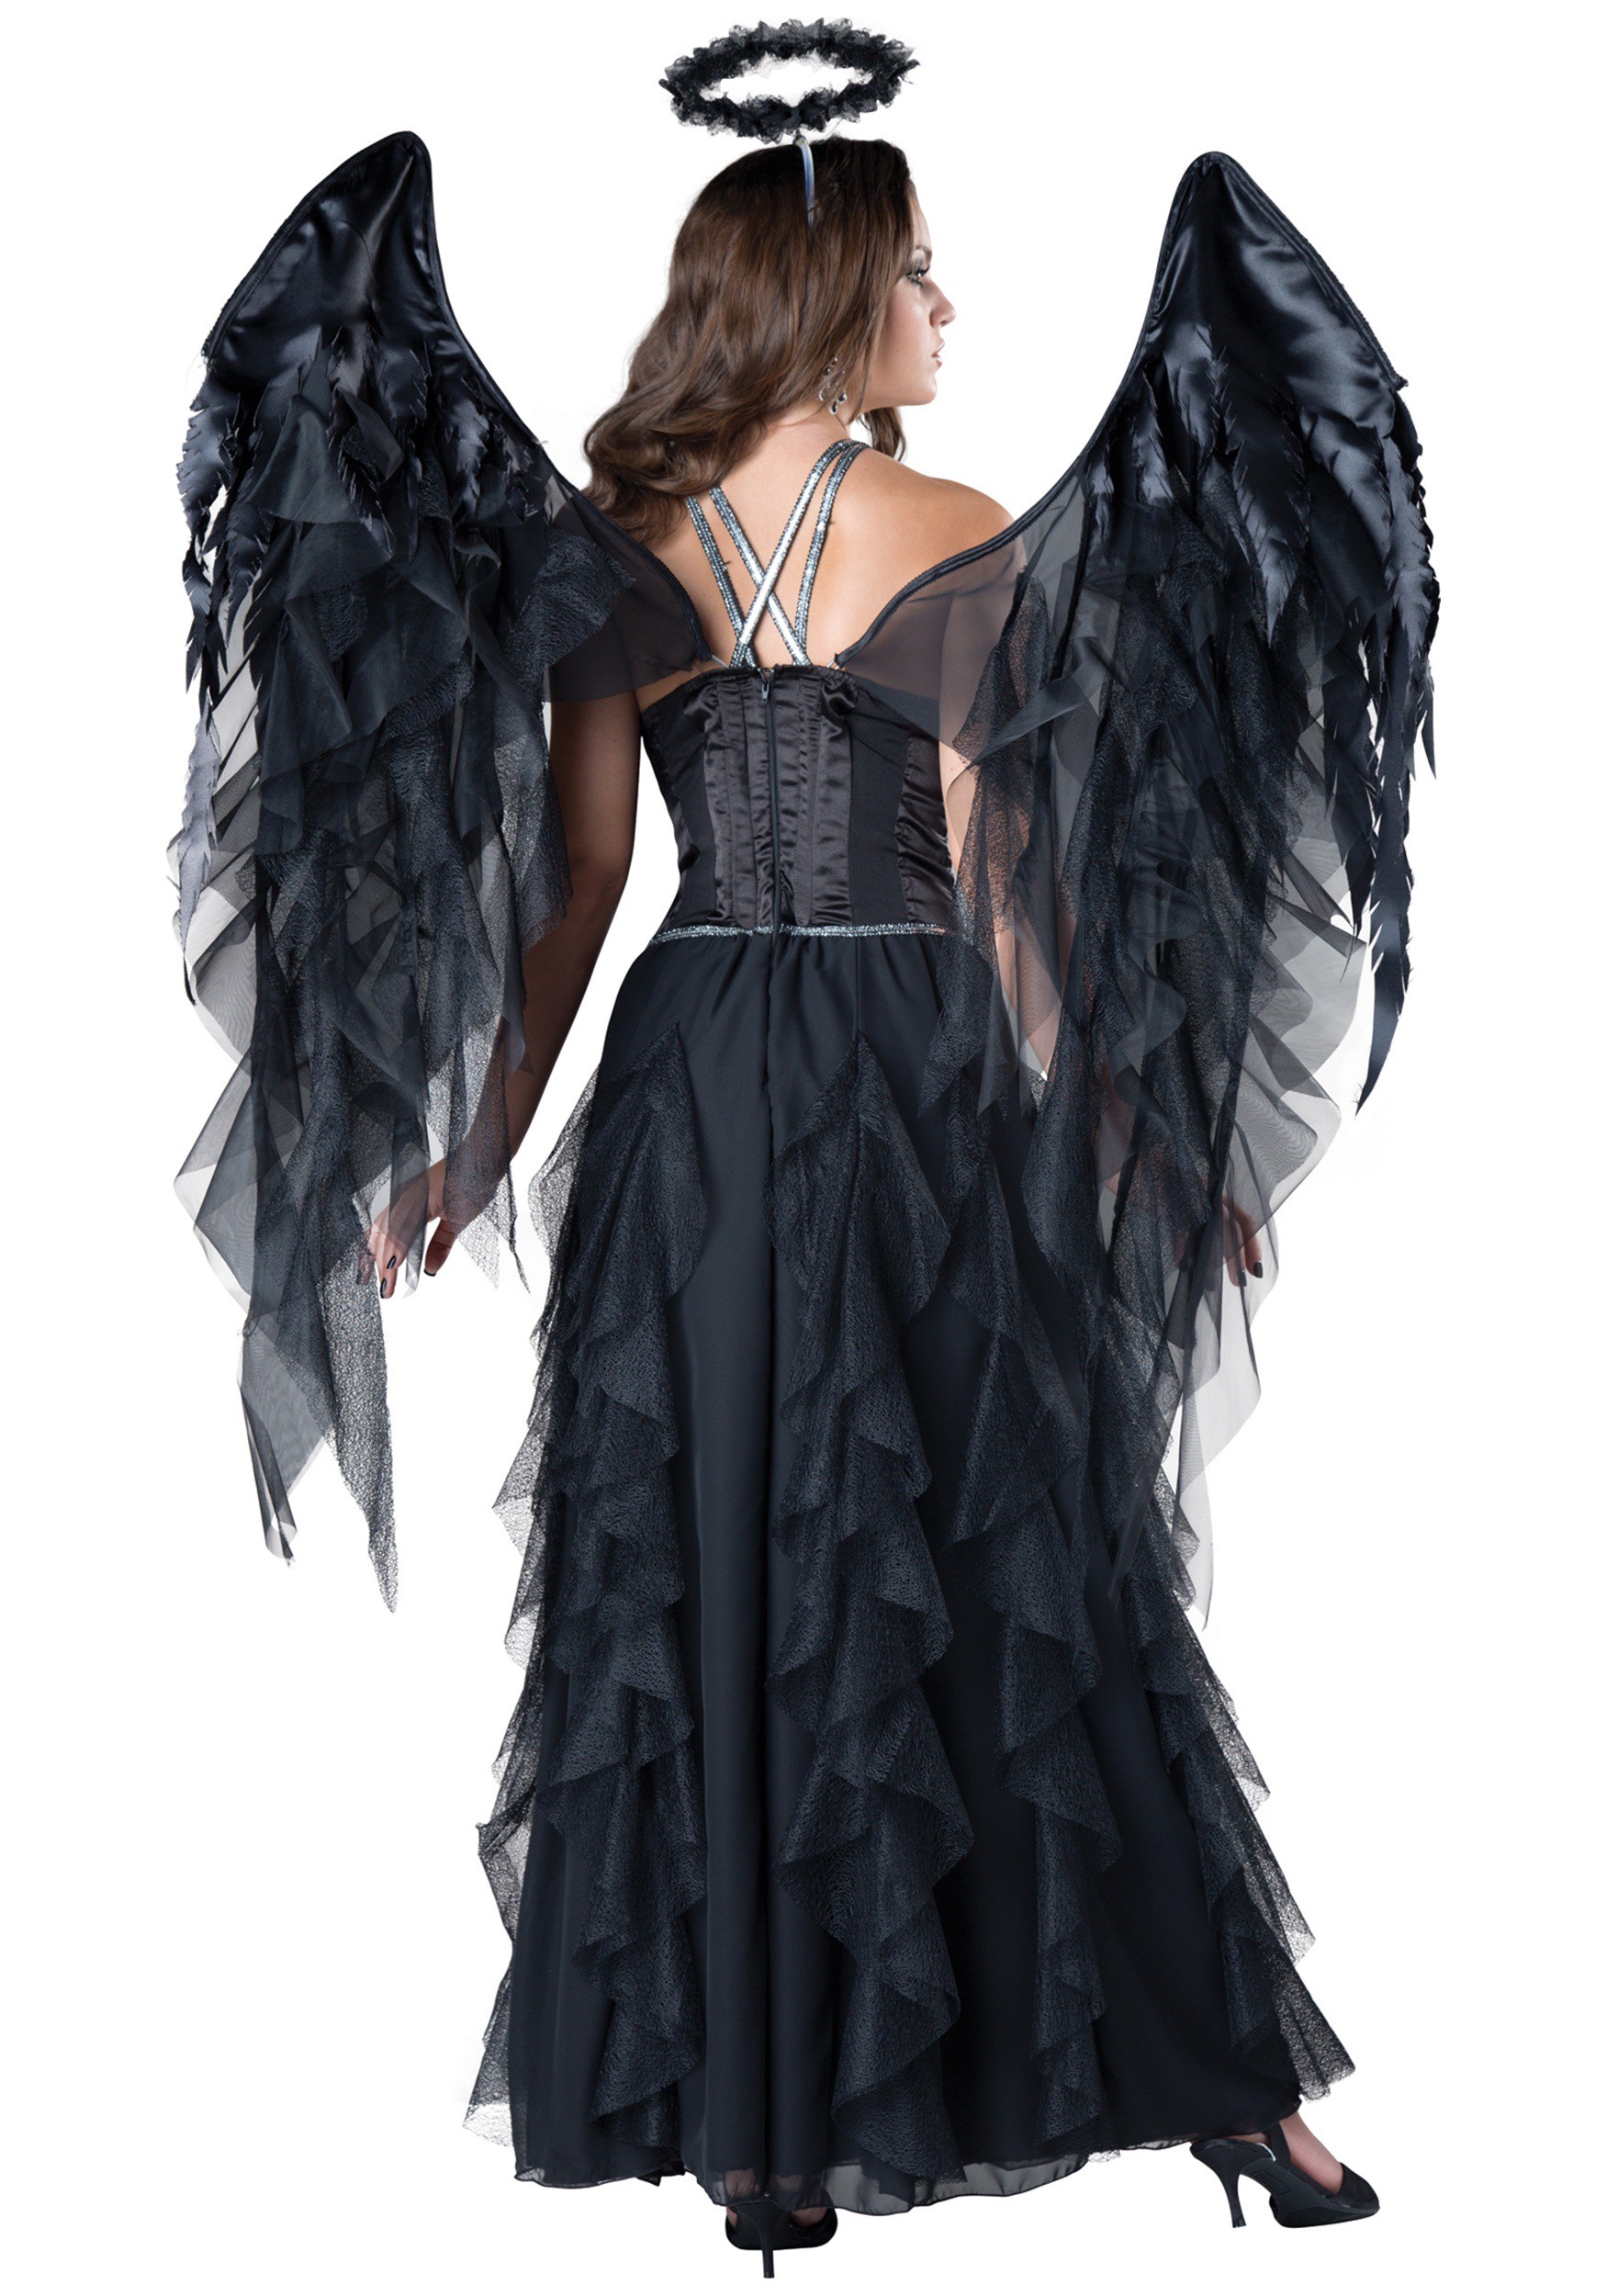 dark angel costumes